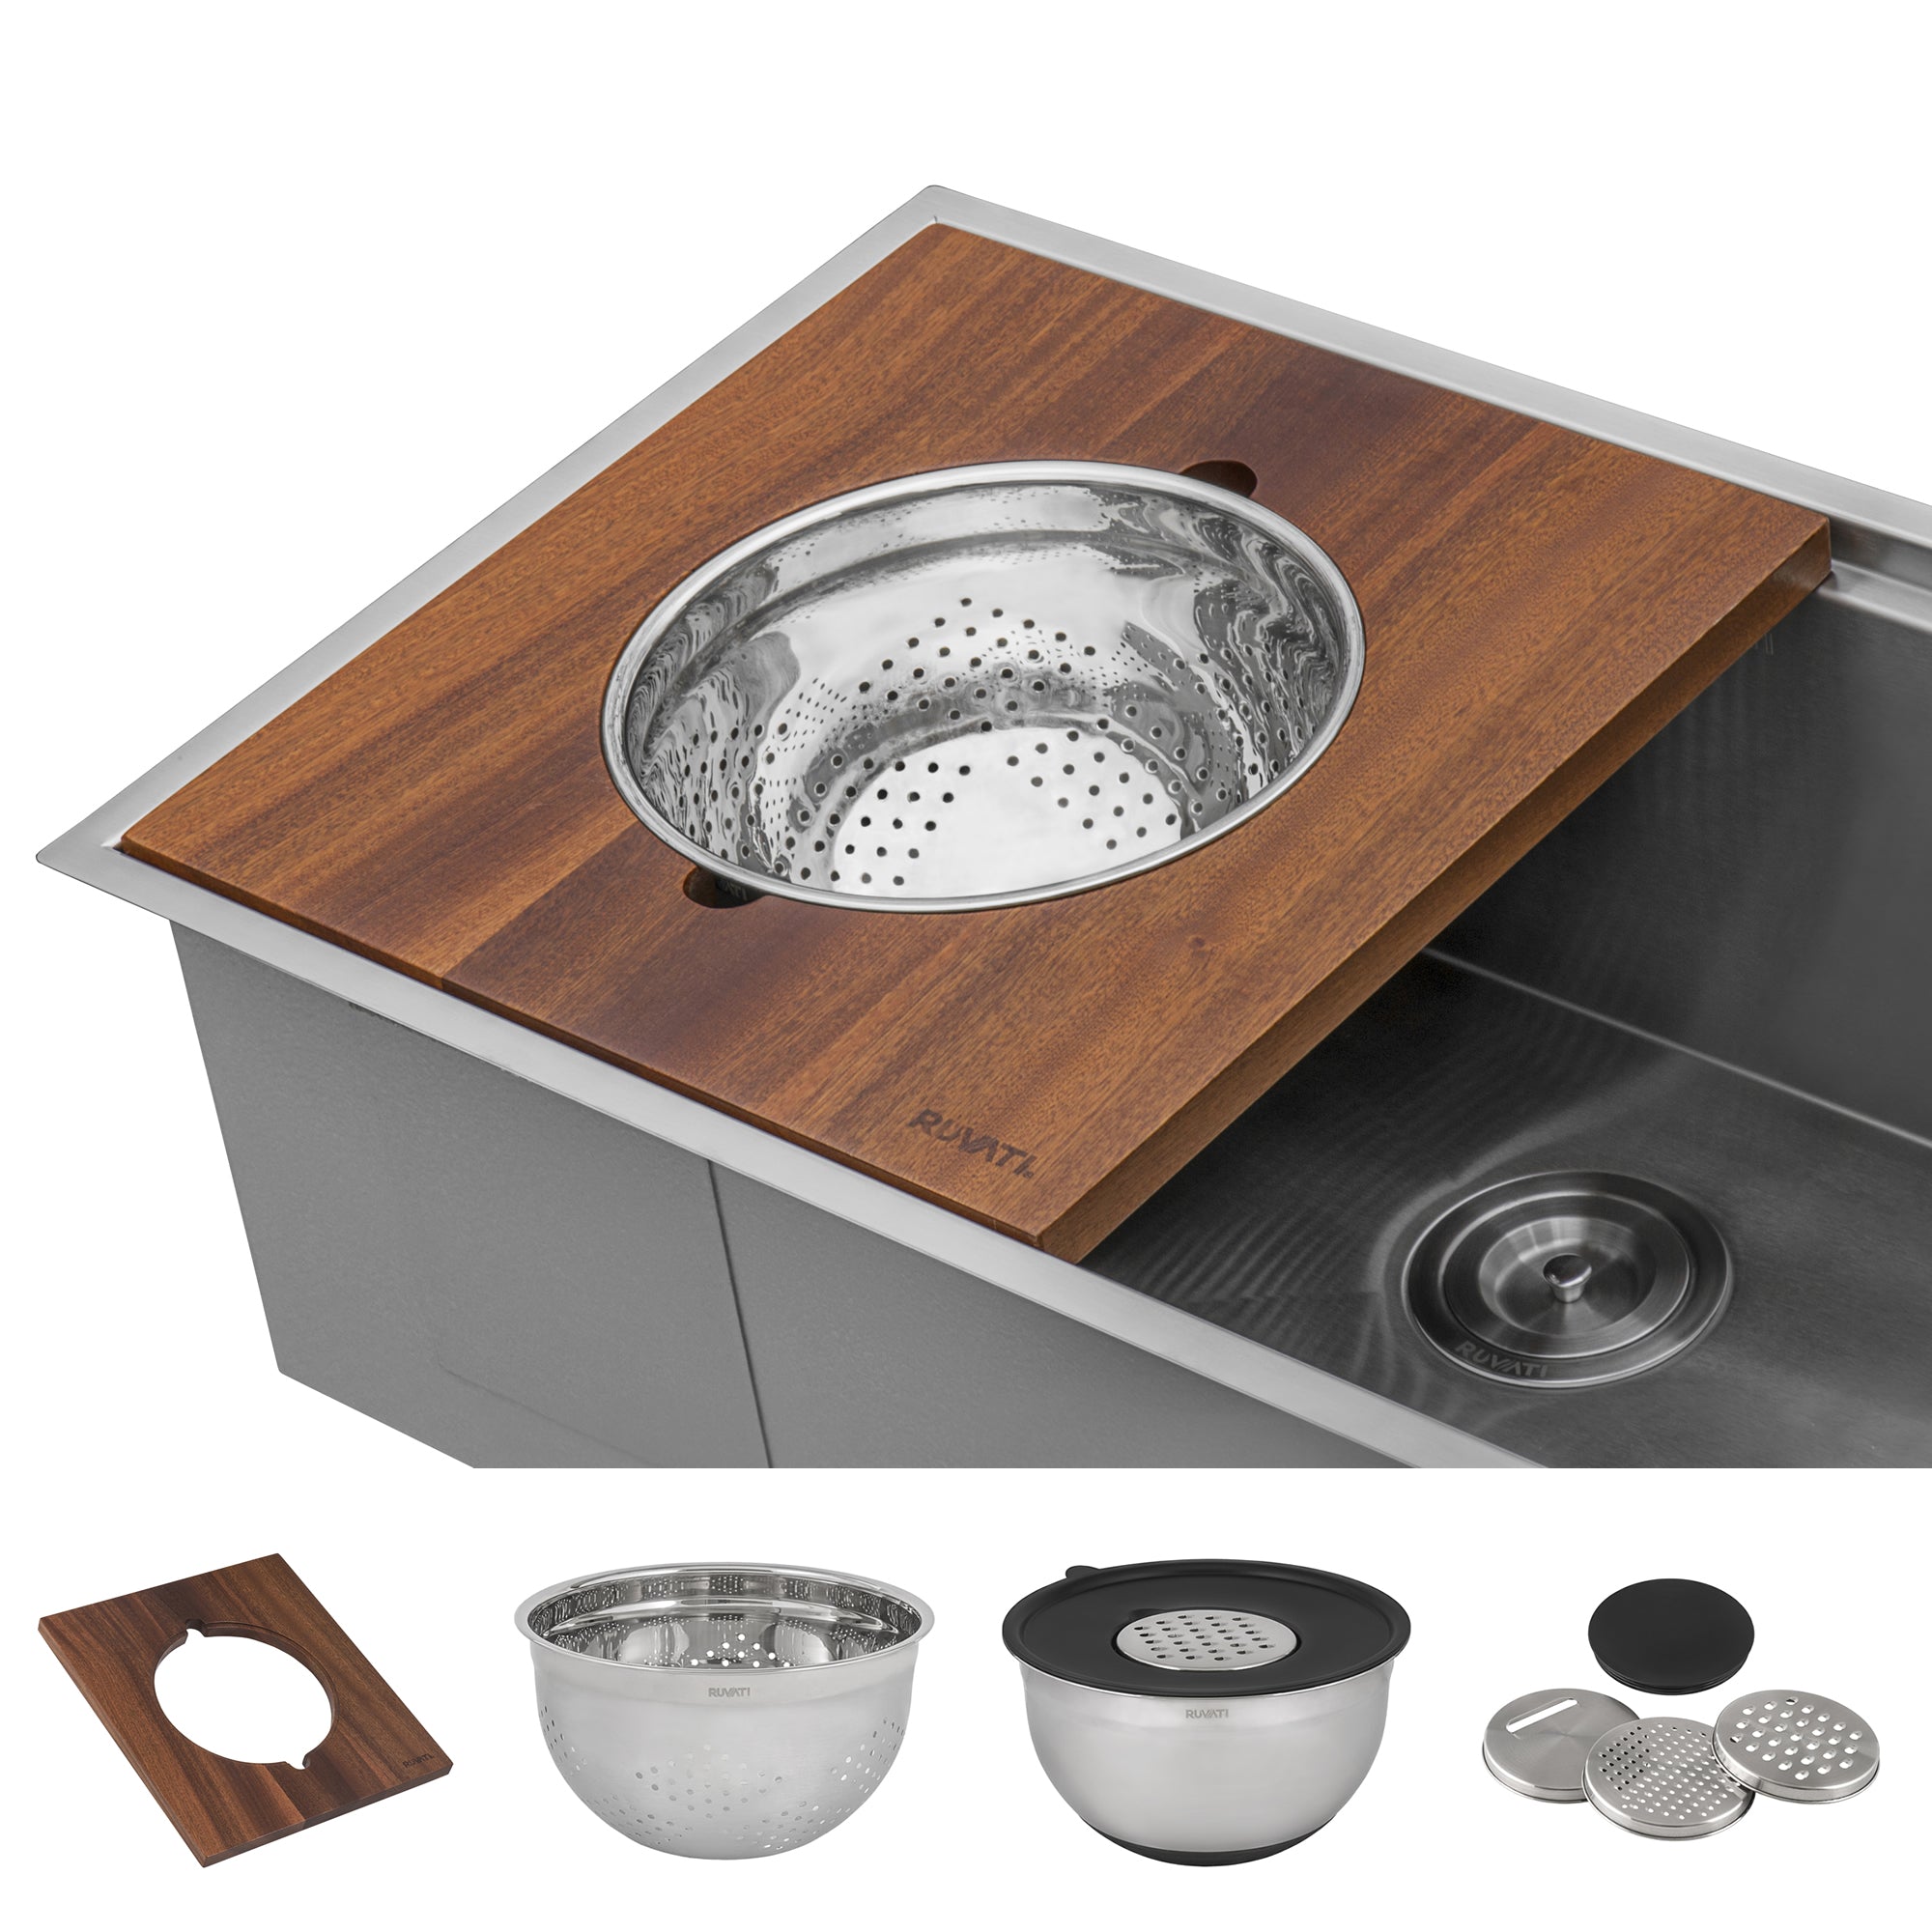 Wood Platform with Mixing Bowl and Colander (complete set) for Workstation Sinks